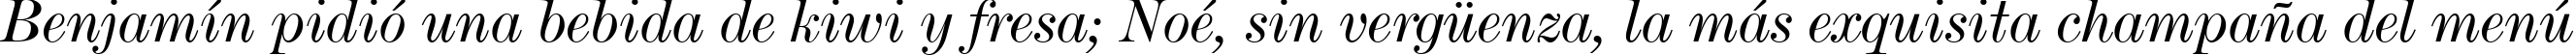 Пример написания шрифтом De Vinne Italic Text BT текста на испанском